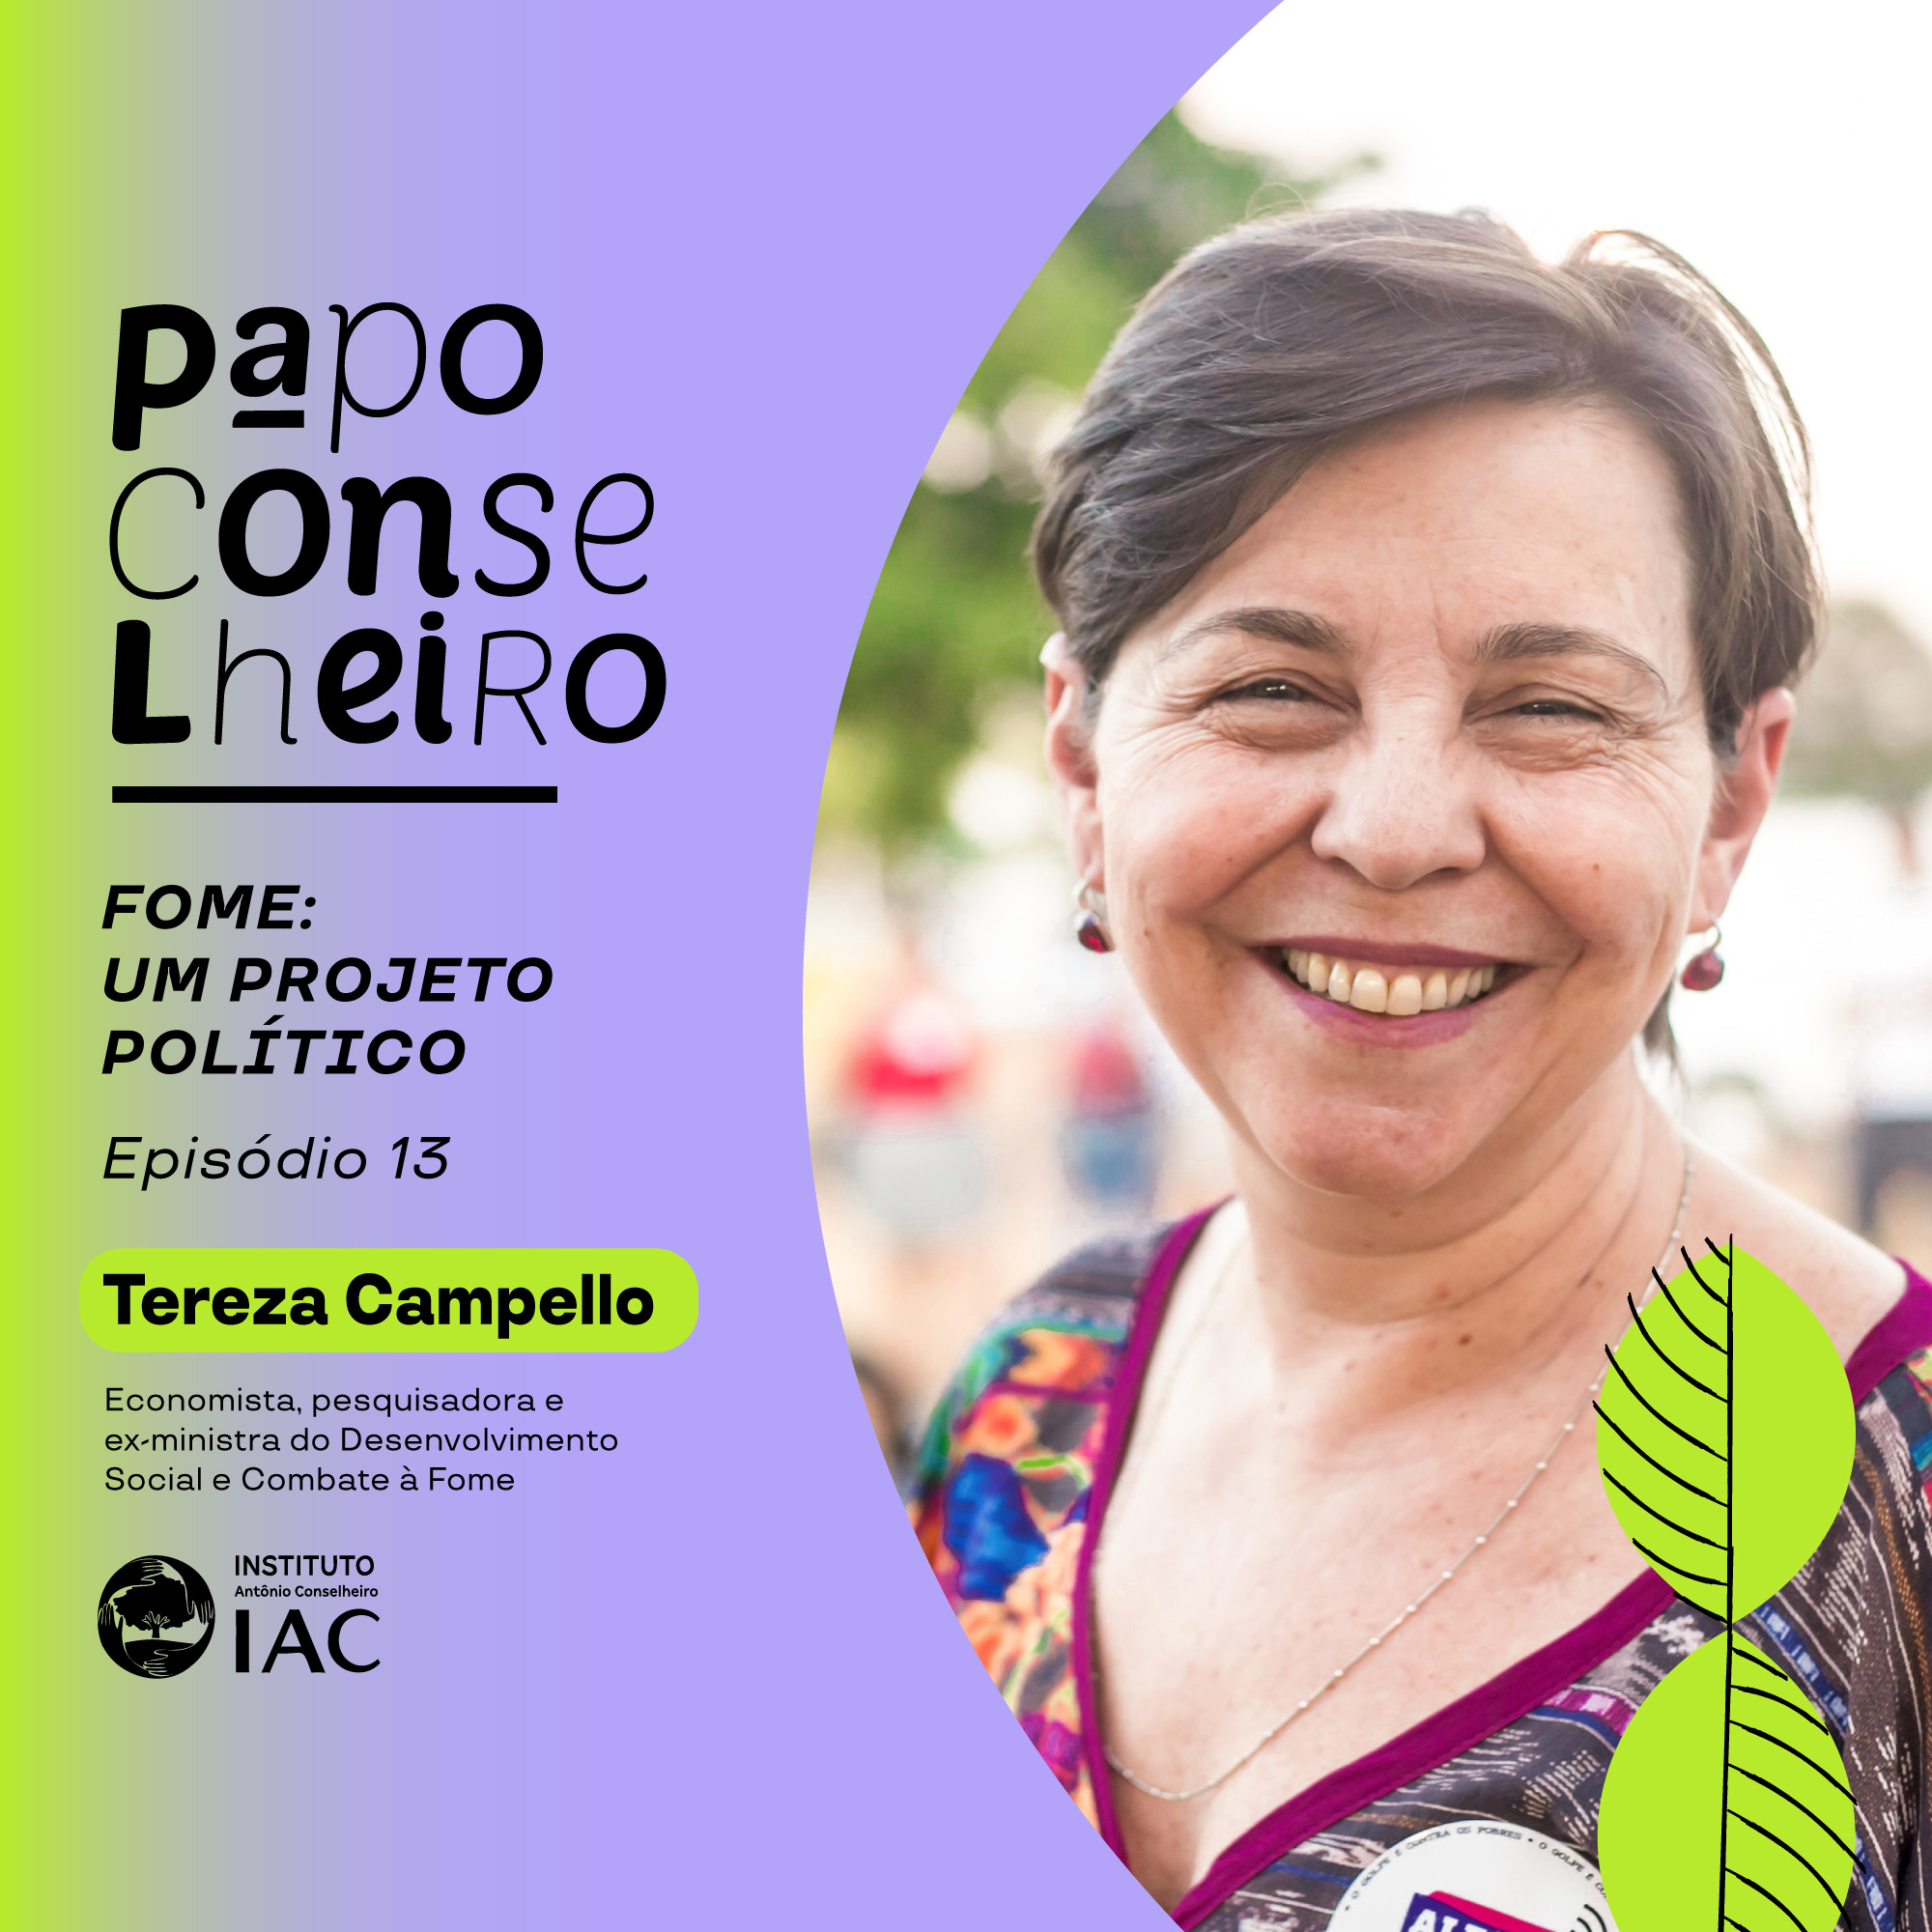 Papo Conselheiro conversa com  Tereza Campello sobre a volta da fome no Semiárido e no Brasil 